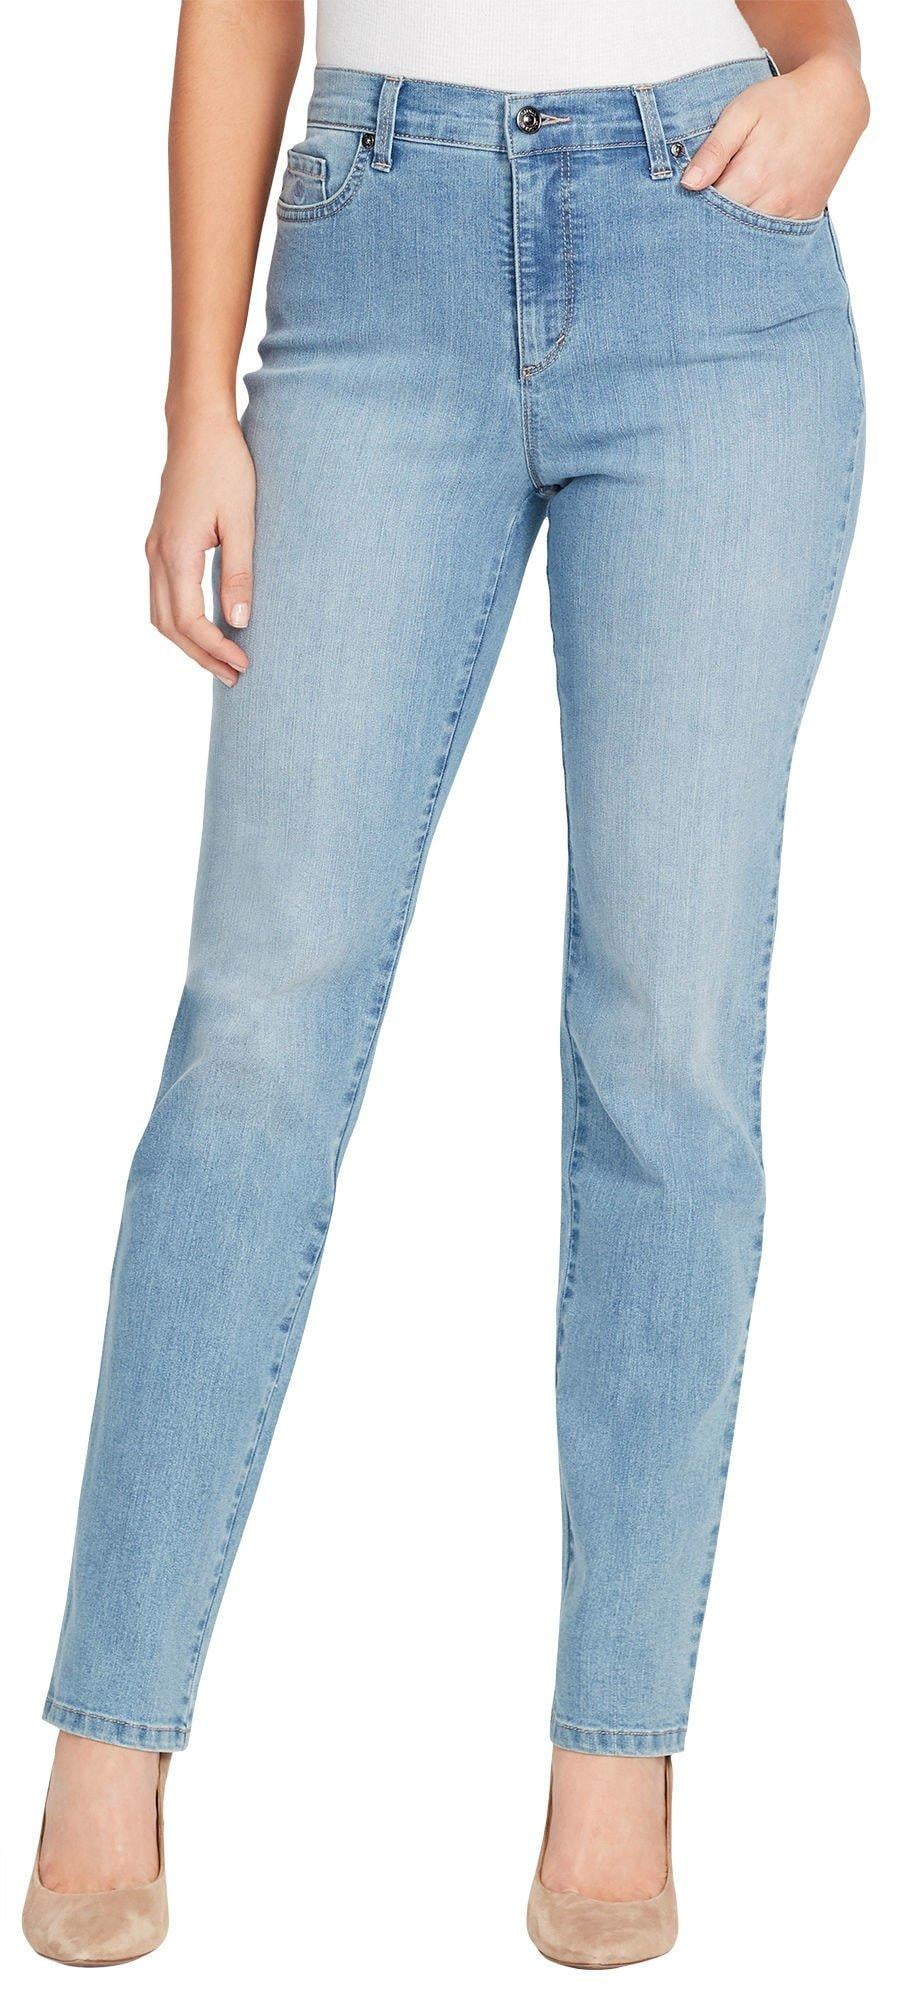 gloria vanderbilt jeans